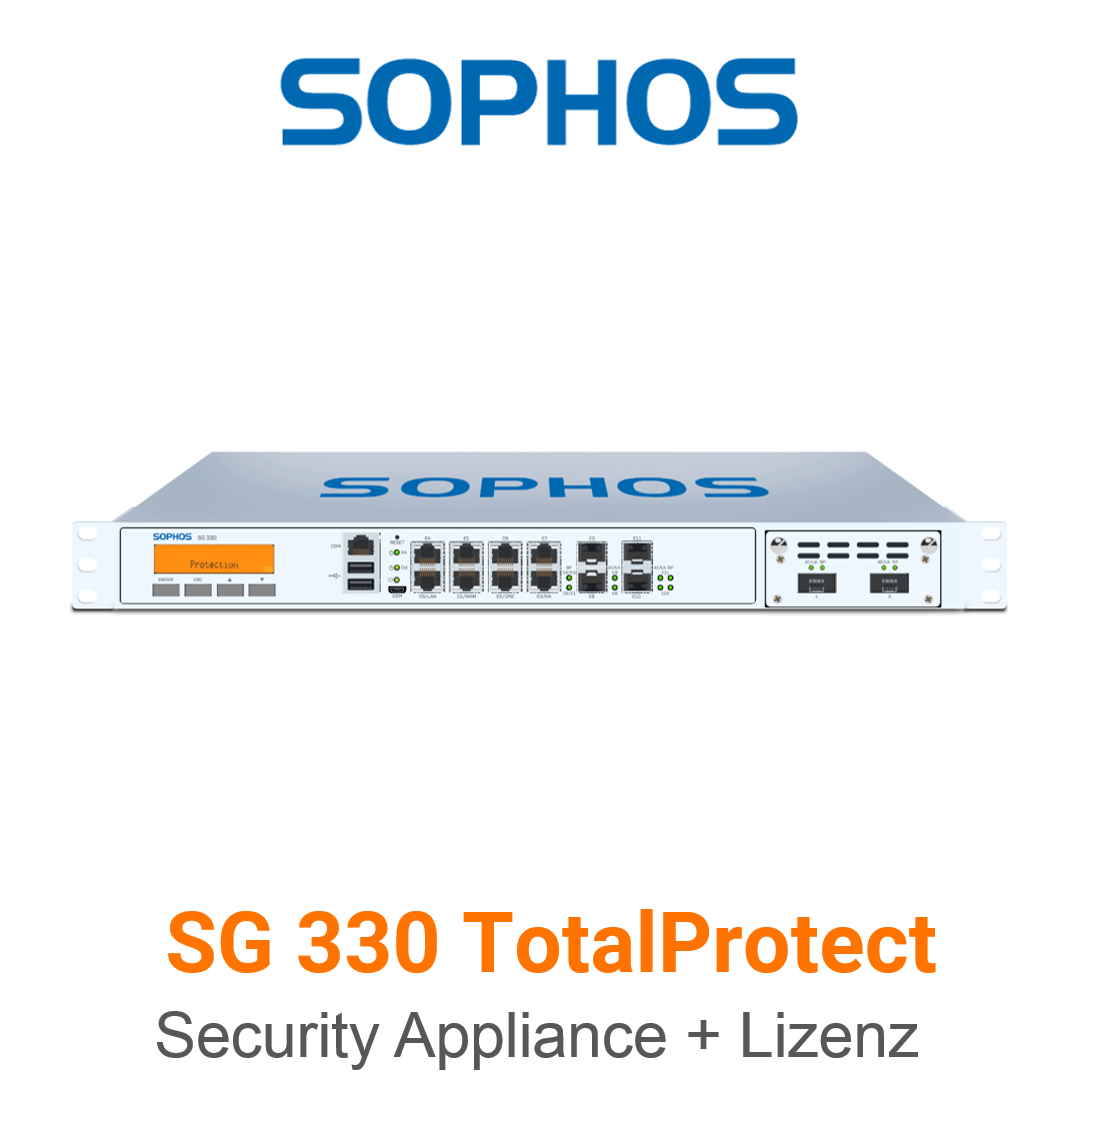 Sophos SG 330 TotalProtect Bundle (Hardware + Lizenz)